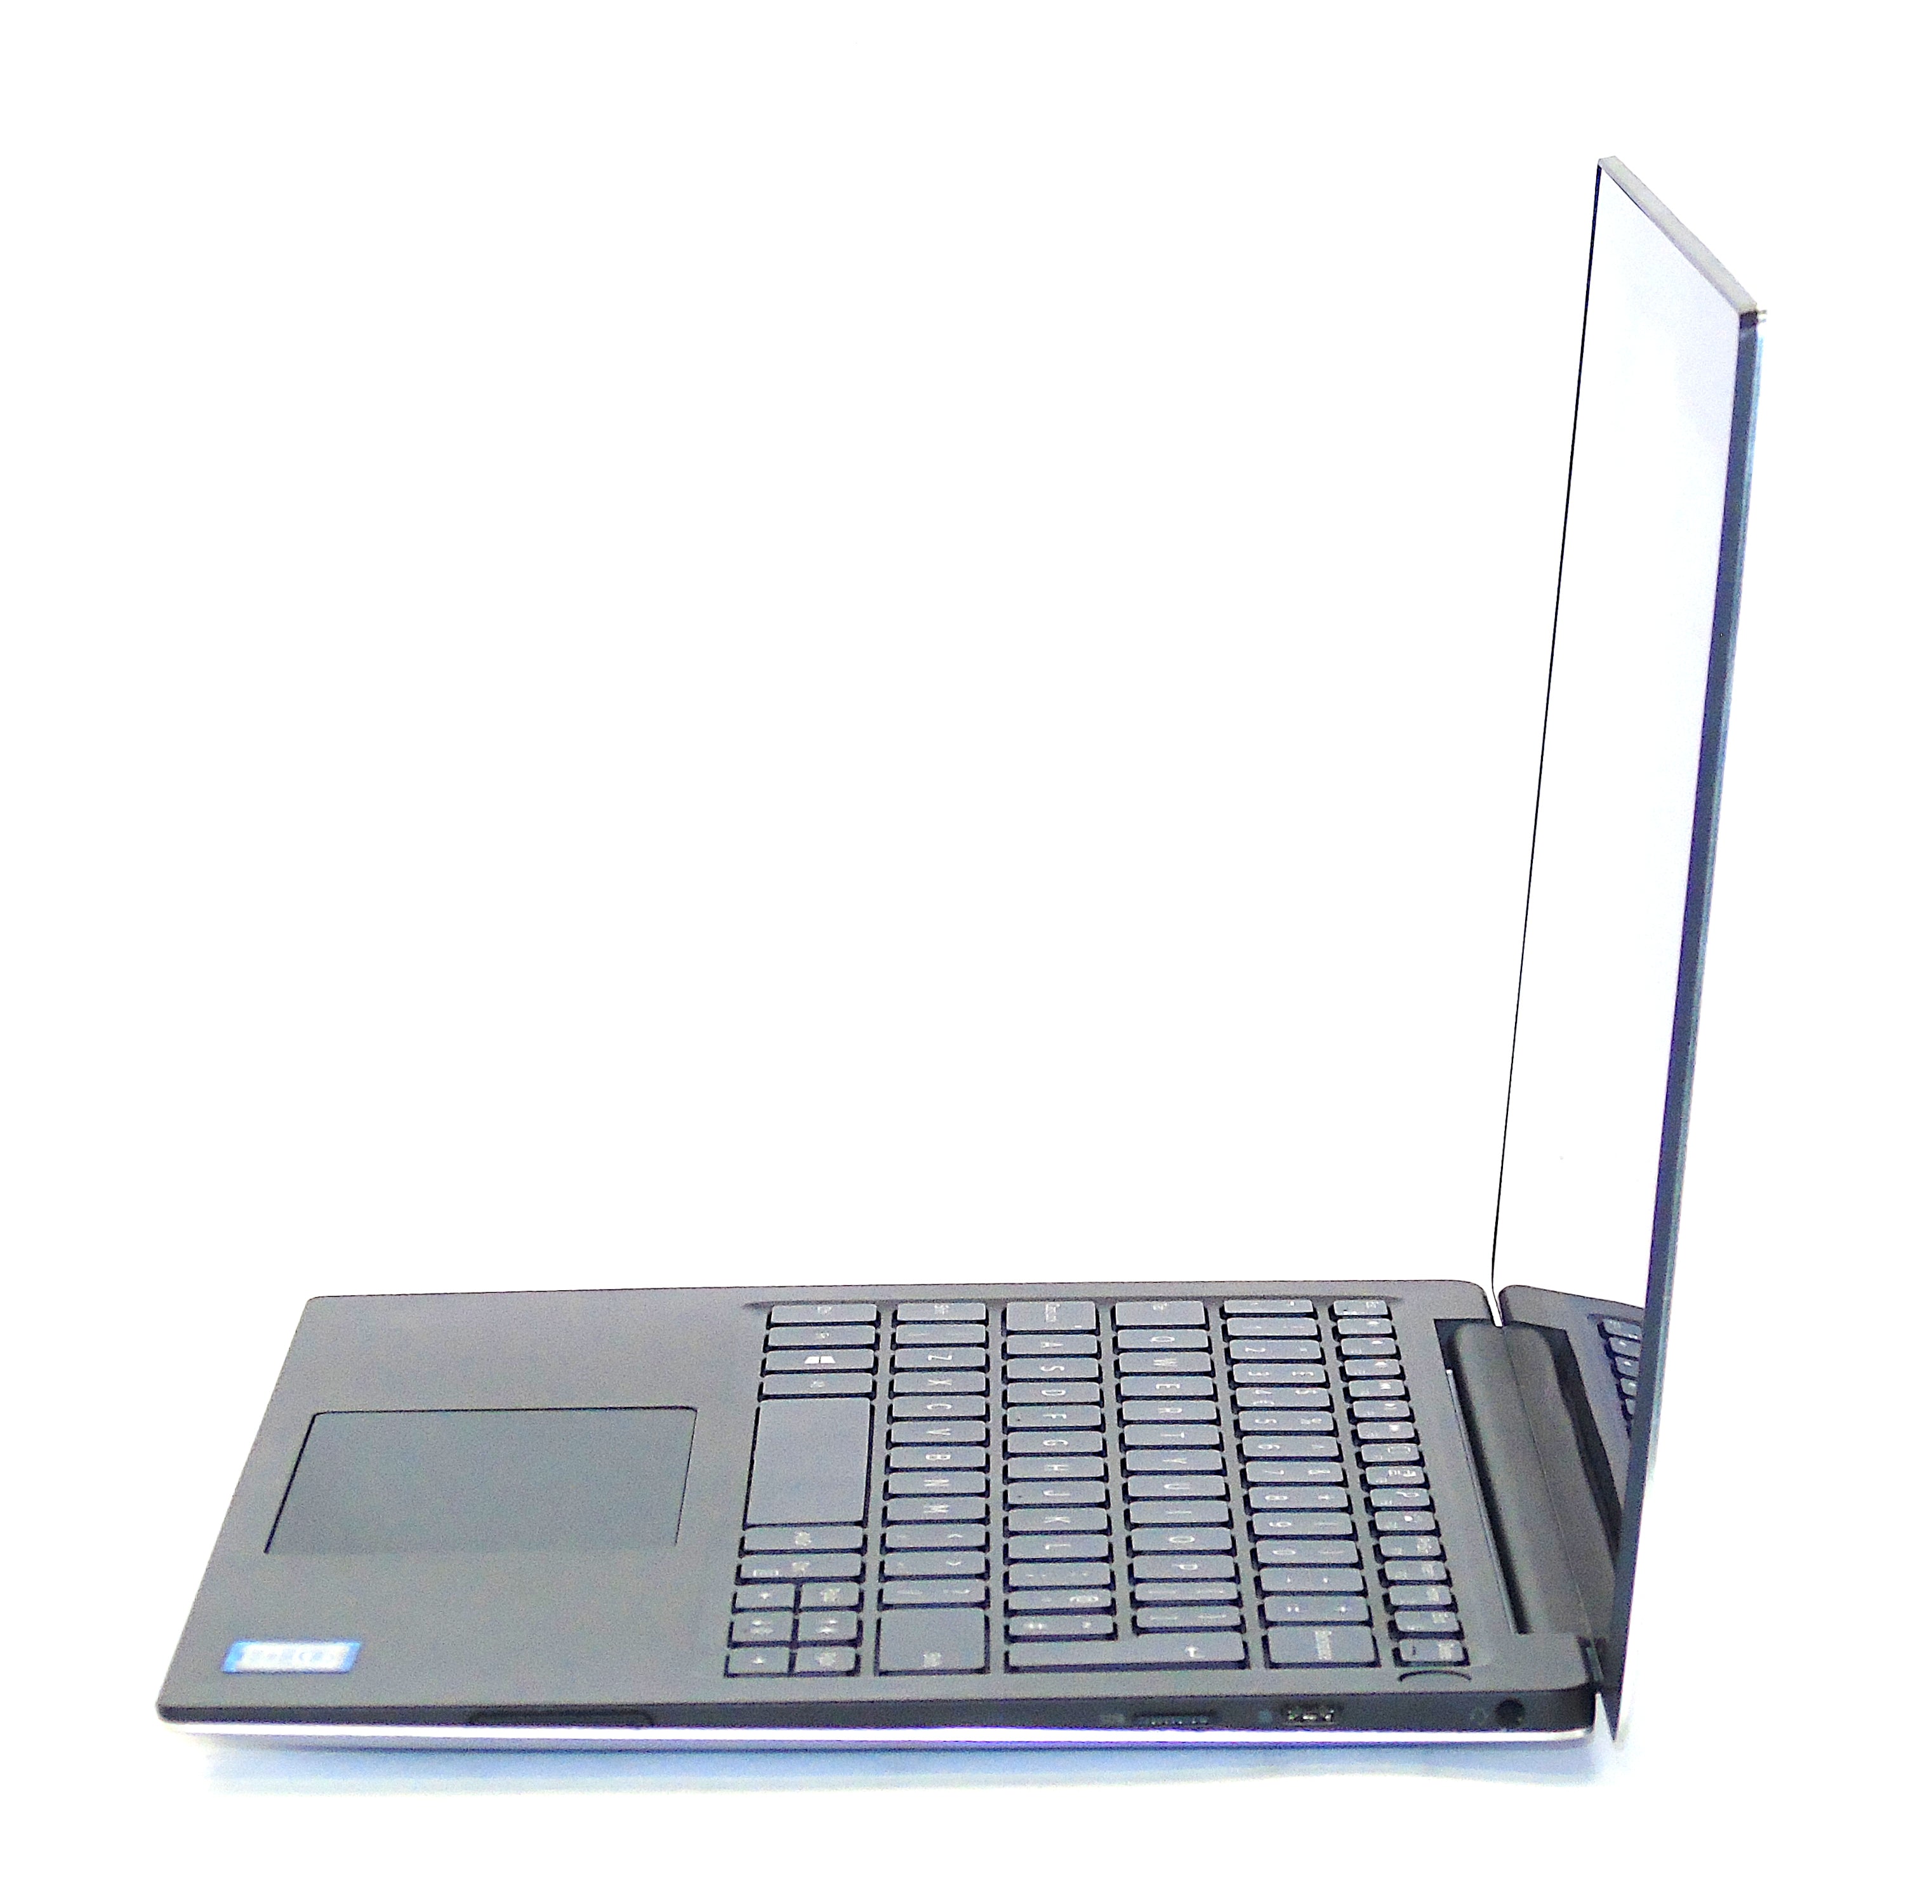 Dell XPS 13 9370 Laptop, 13.3" Core i7 8th Gen, 16GB RAM, 256GB SSD